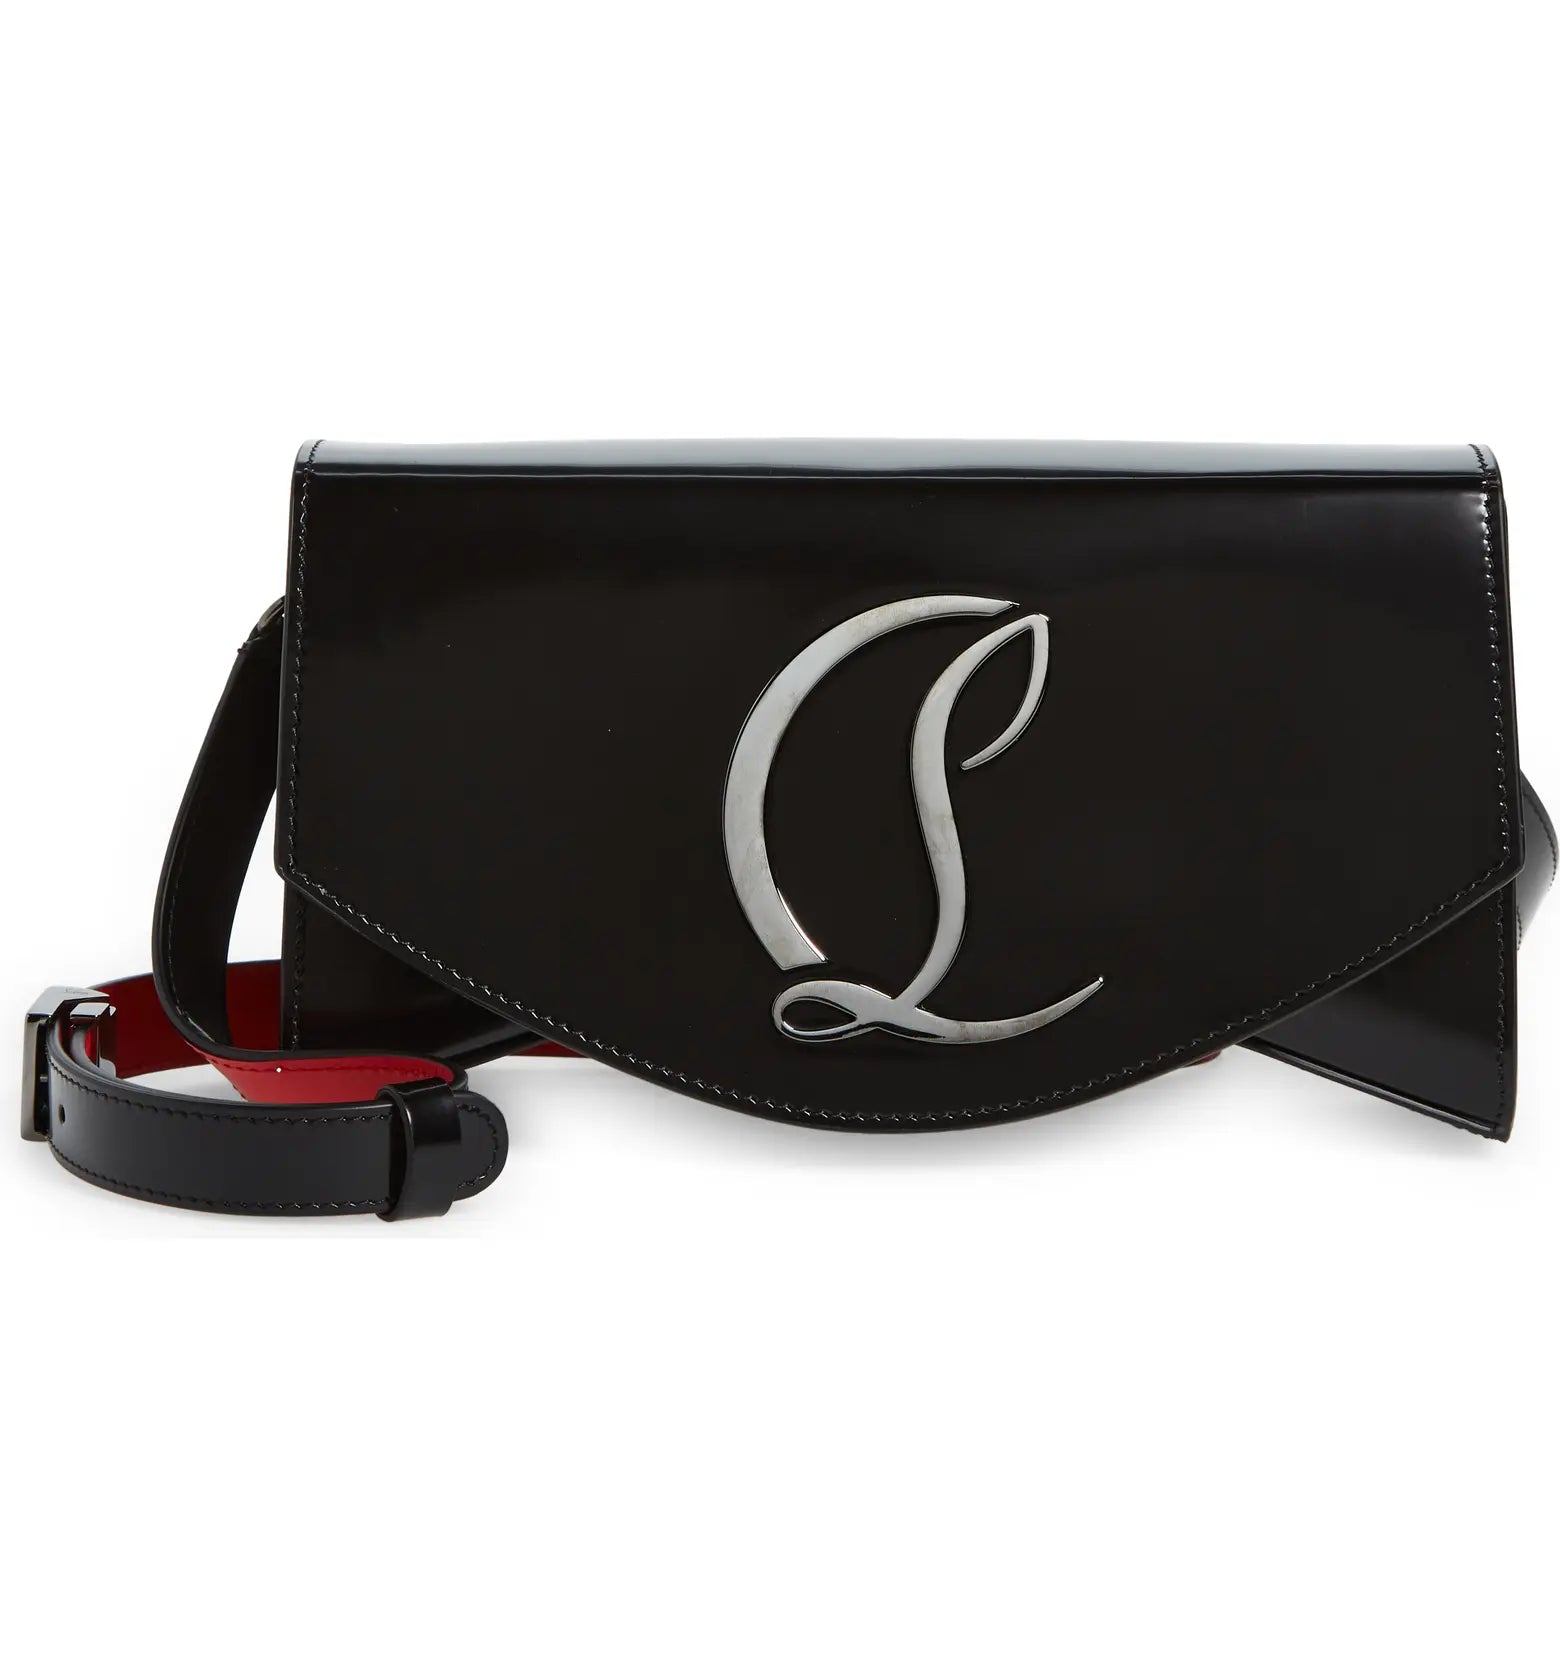 Christian Louboutin Loubi54 Patent Leather Shoulder Bag